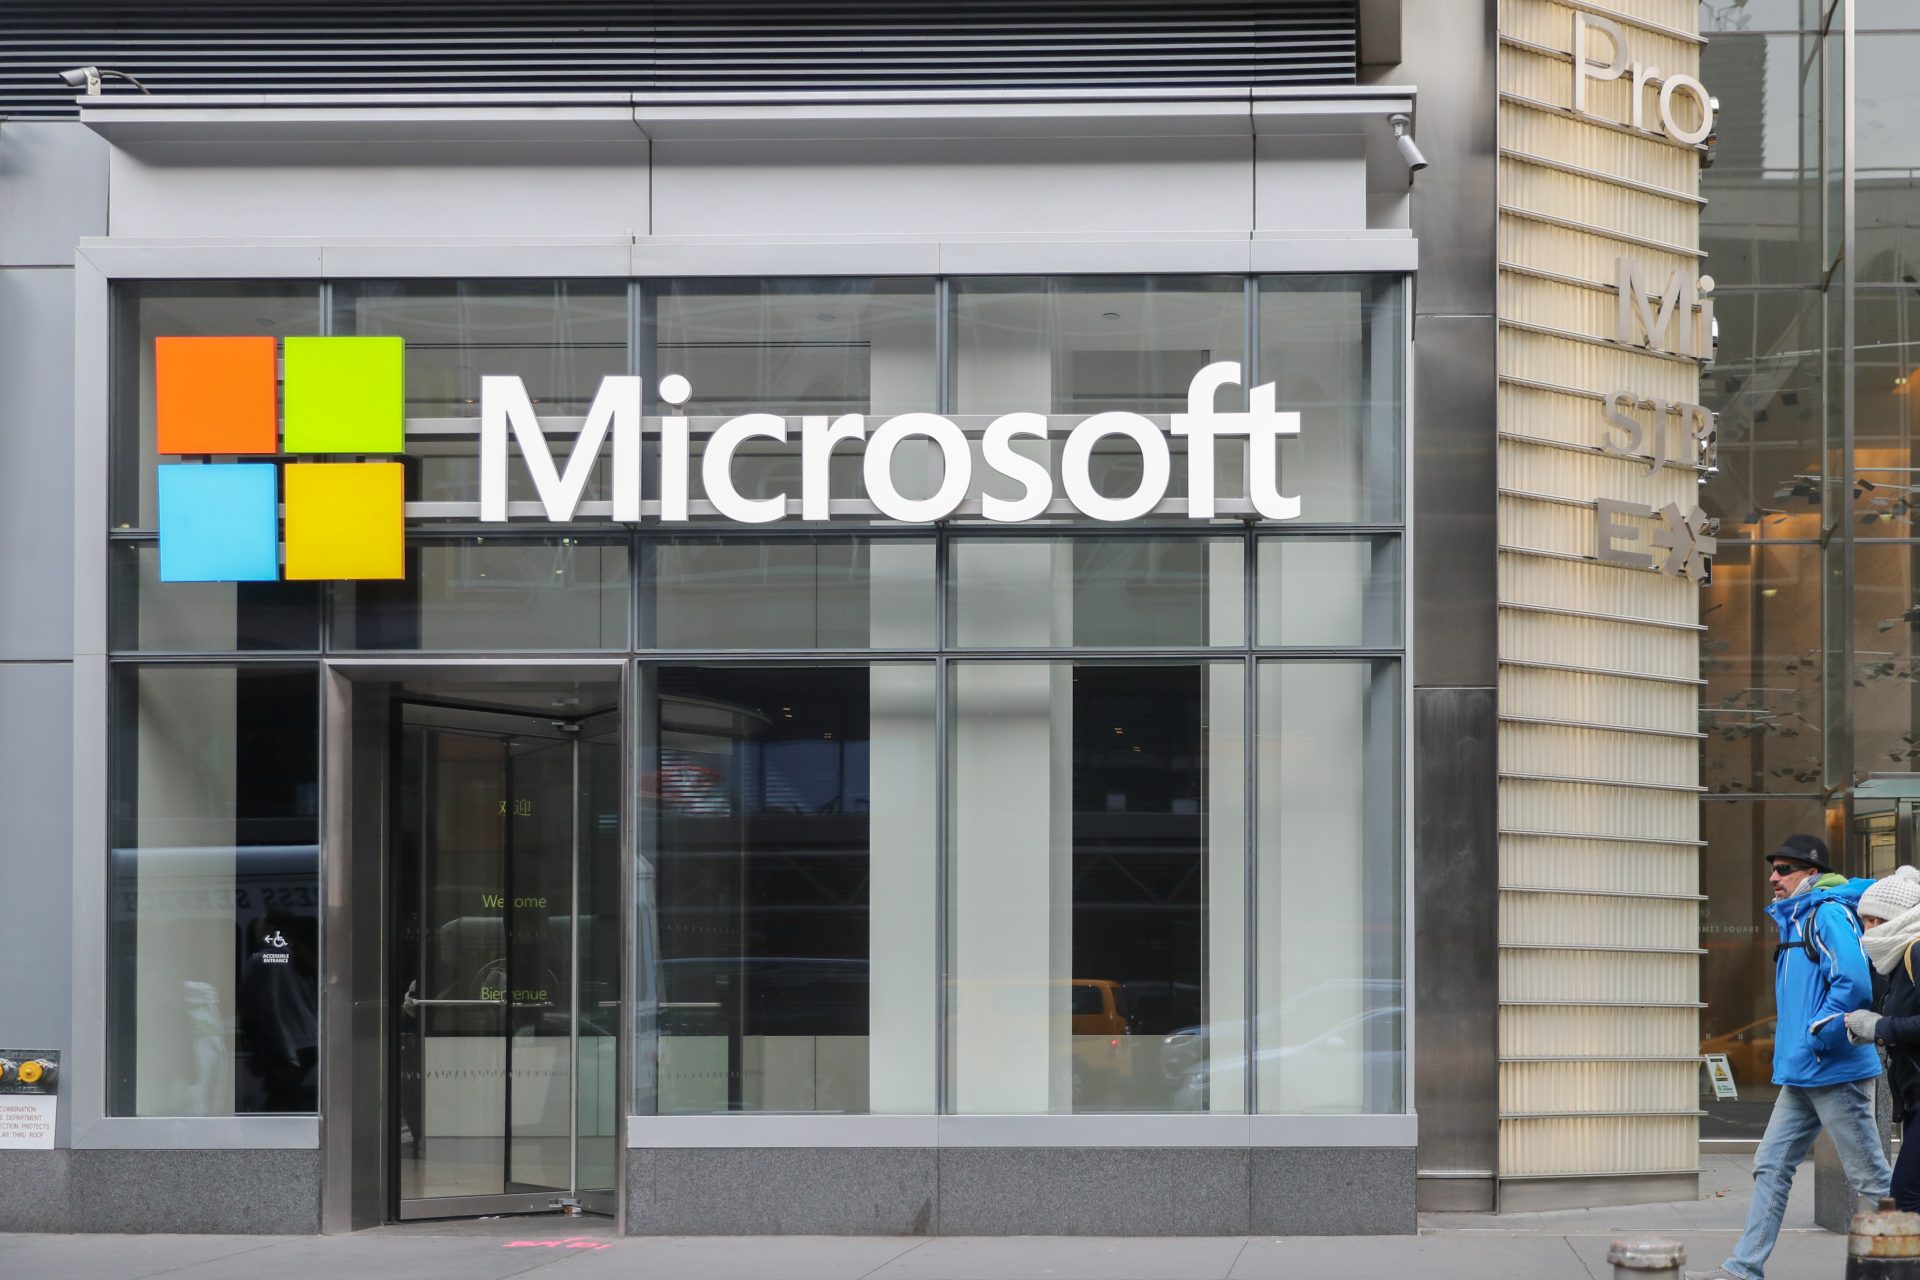 Microsoft Defender will robotically dwell Alternate server exploits